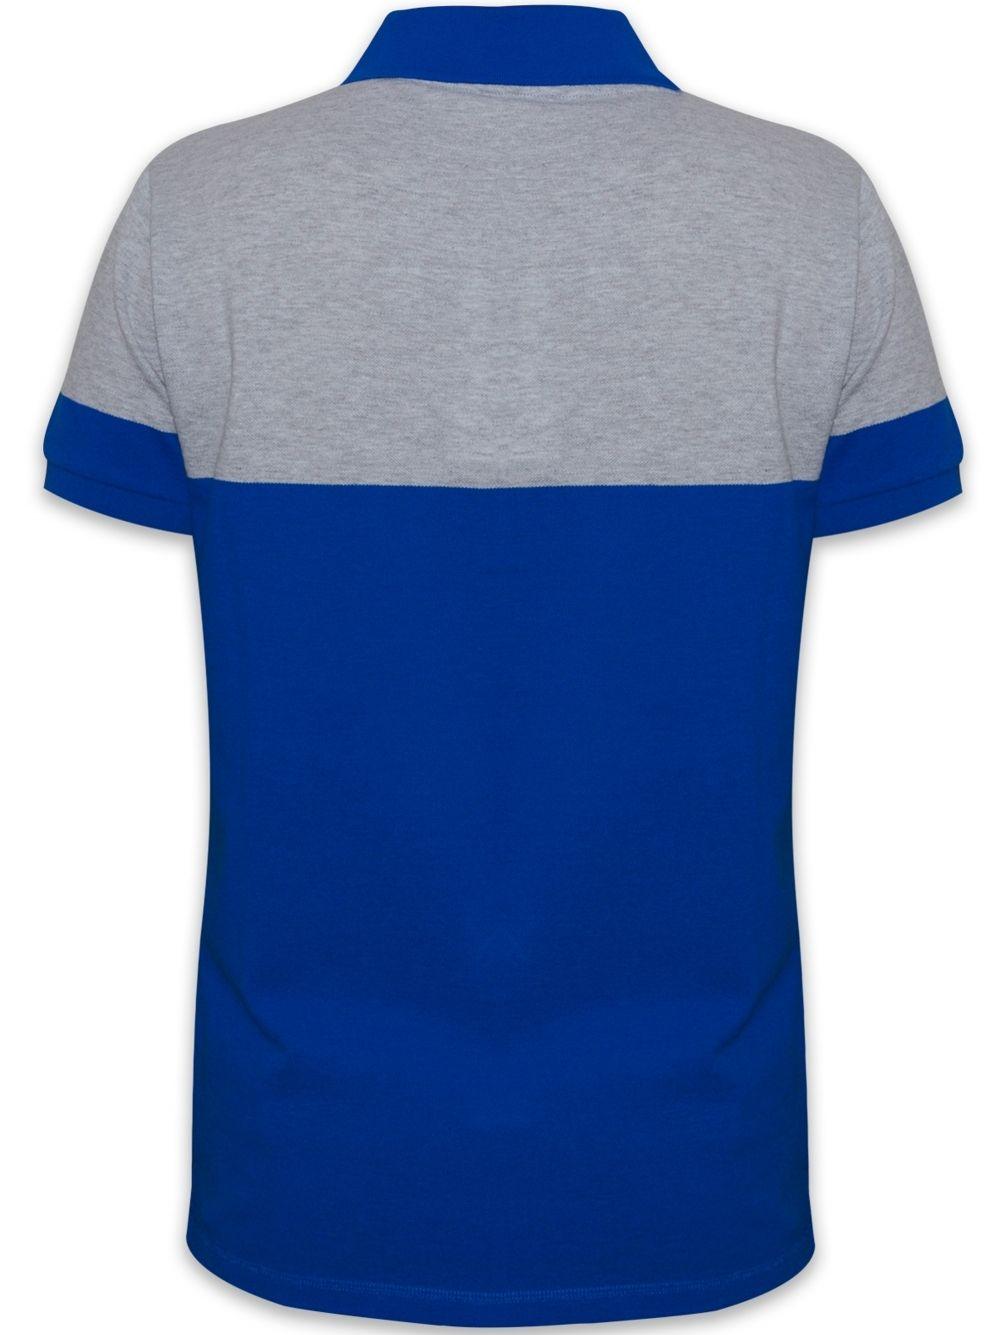 Blue Polo Logo - Kenzo Clothing. Mens Kenzo Polo Shirts